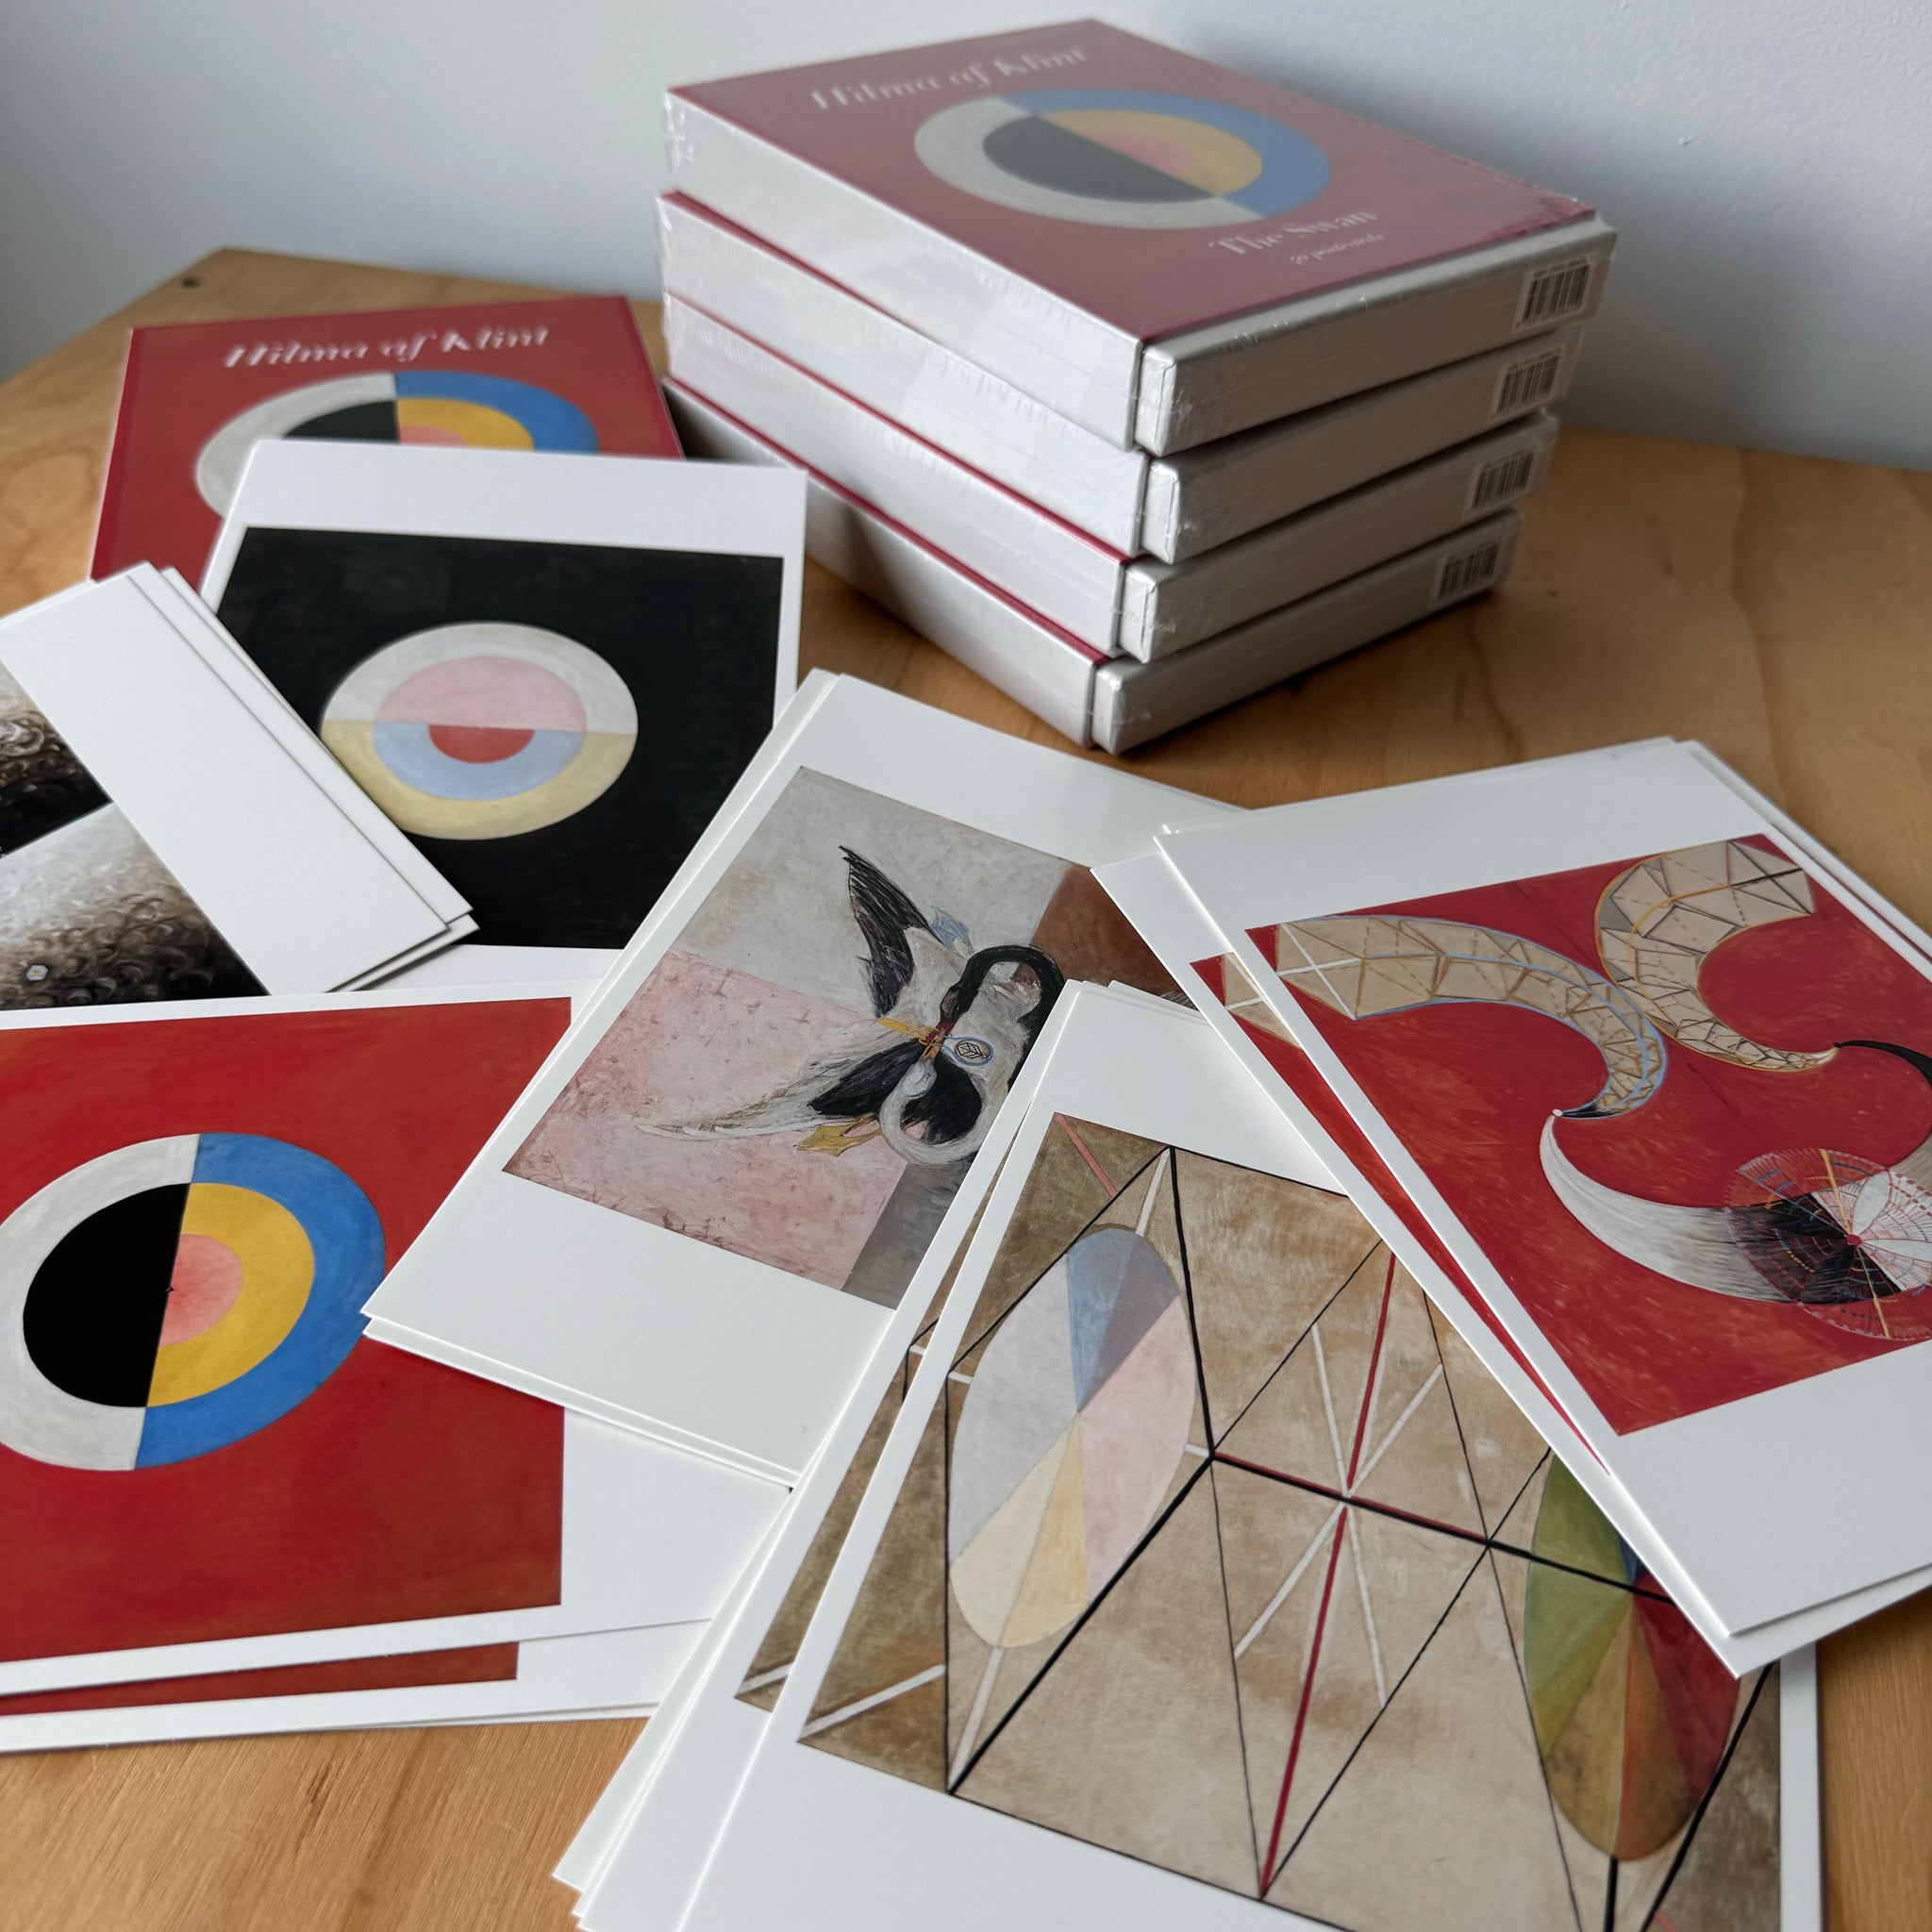 Hilma af Klint: The Swan Postcard Box